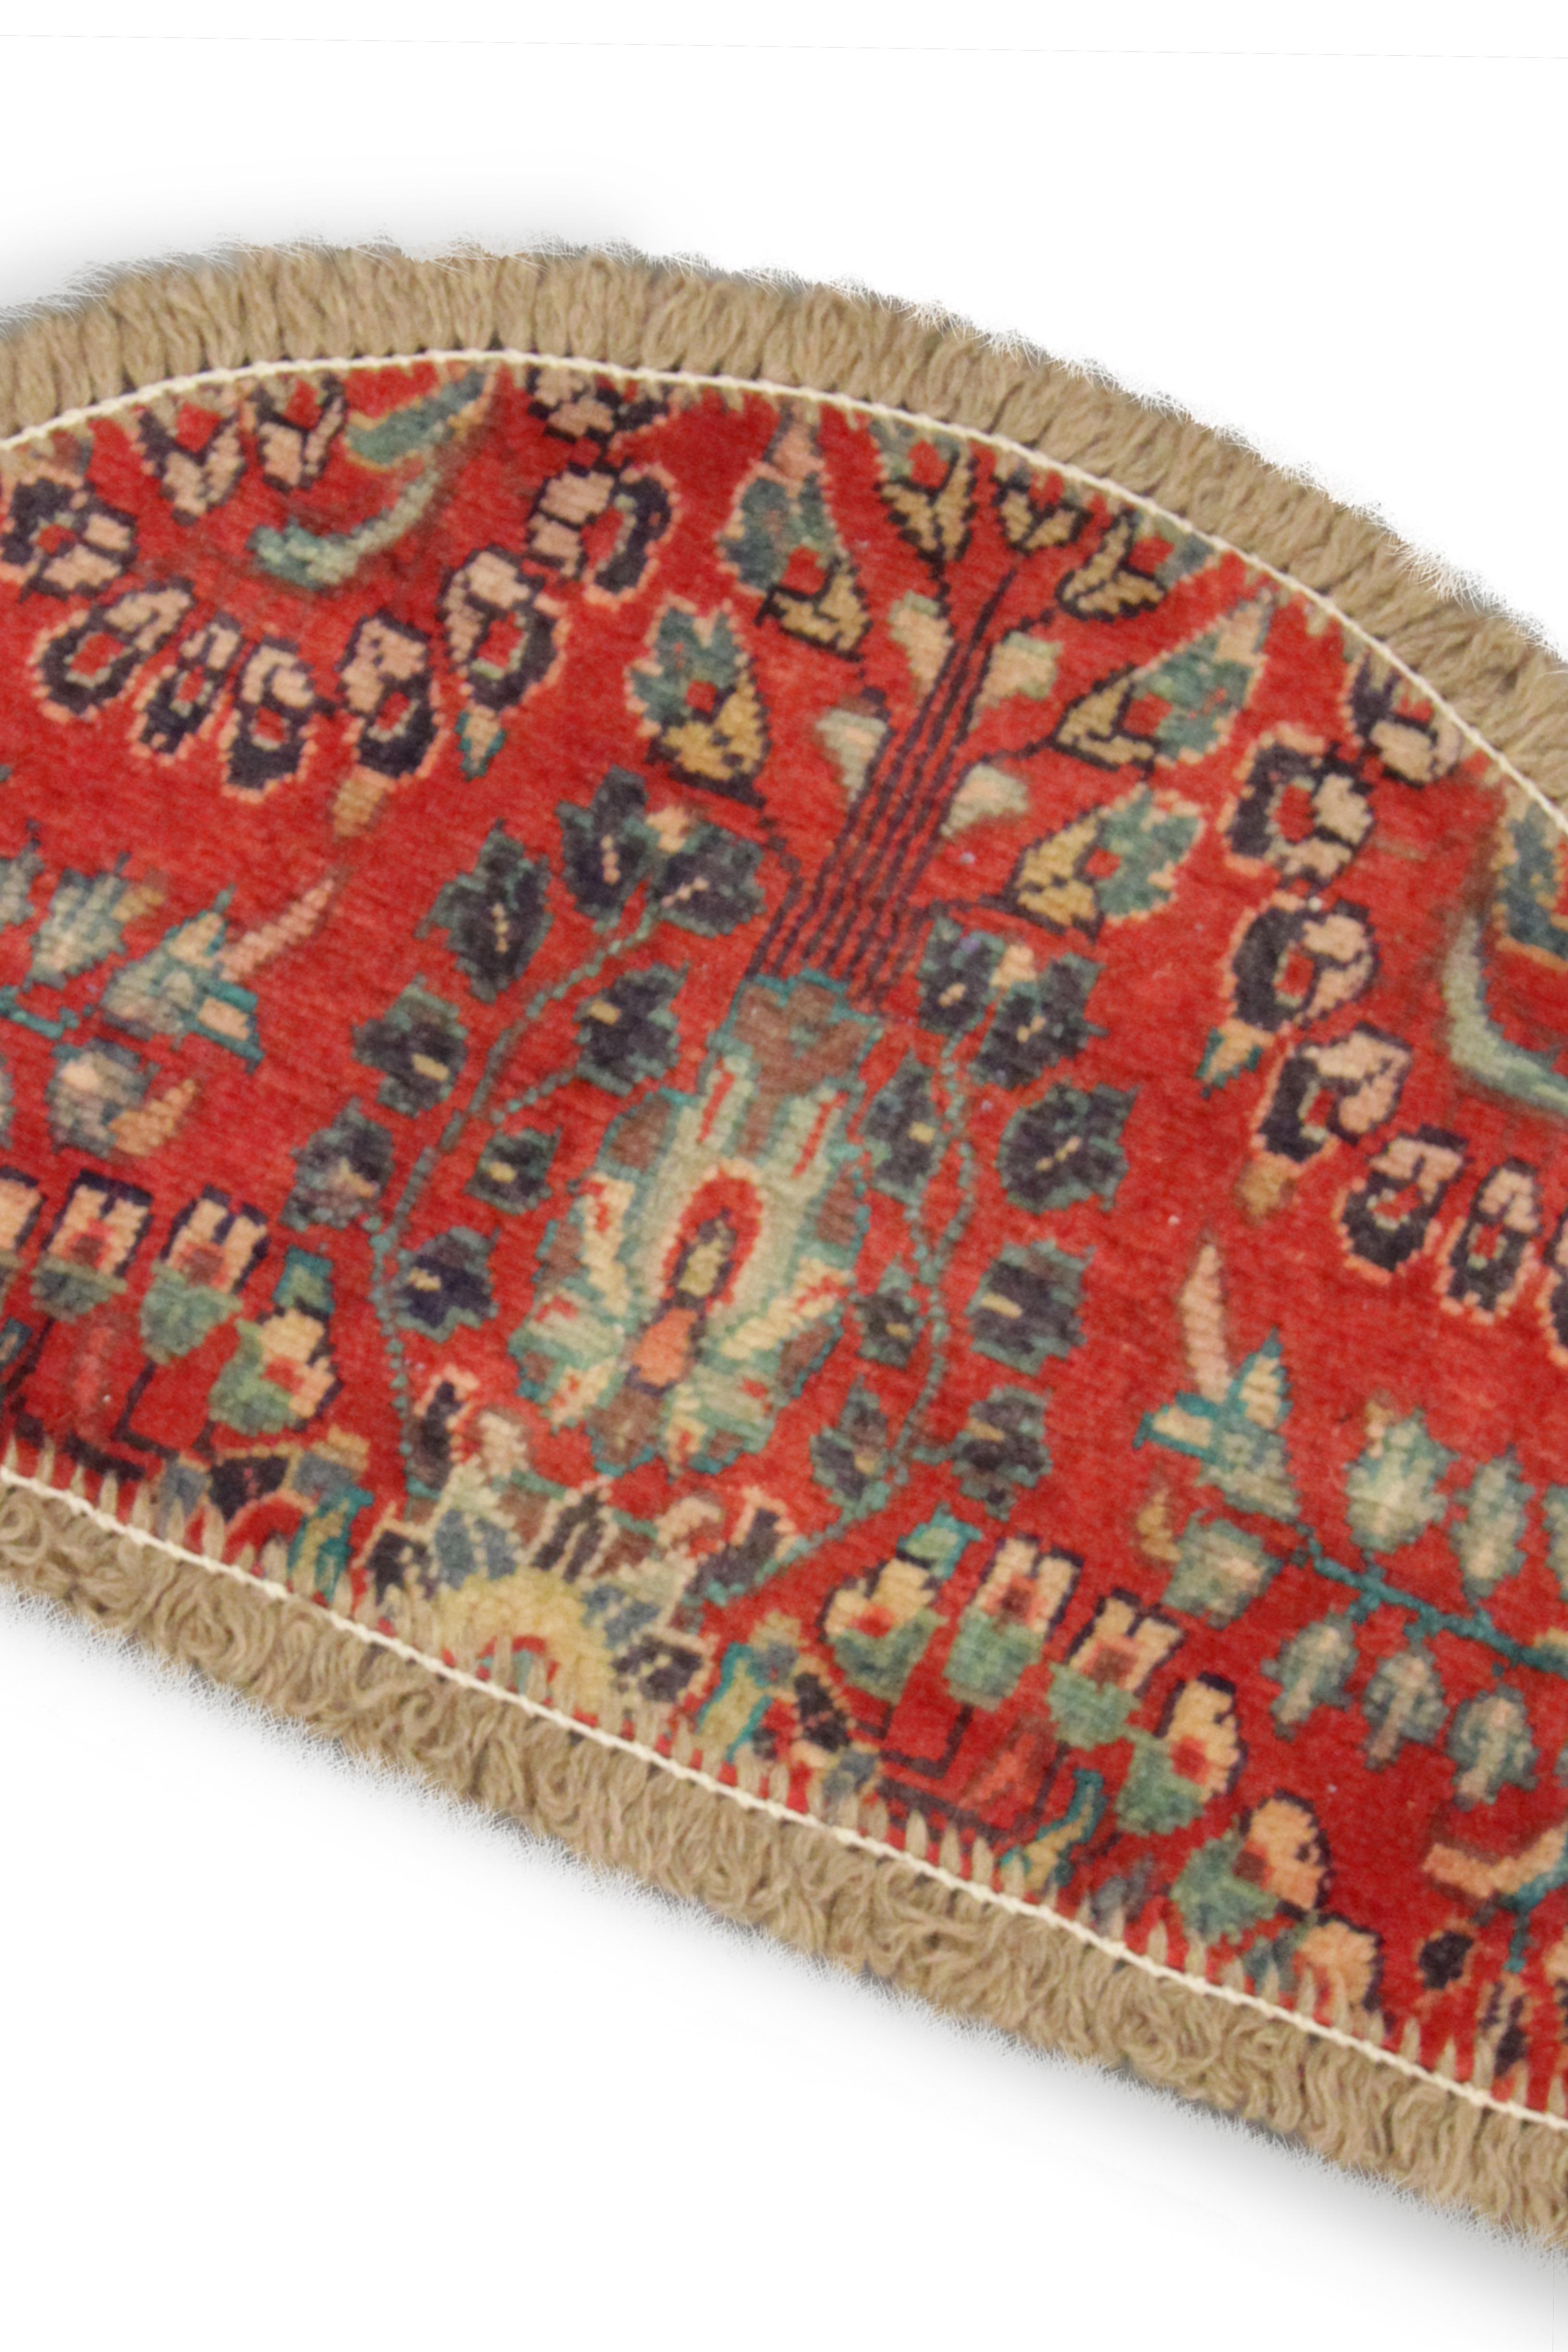 Art Nouveau Handmade Carpet, Semicircle Entrance Way Mat Vintage Oriental Rug Door Mat